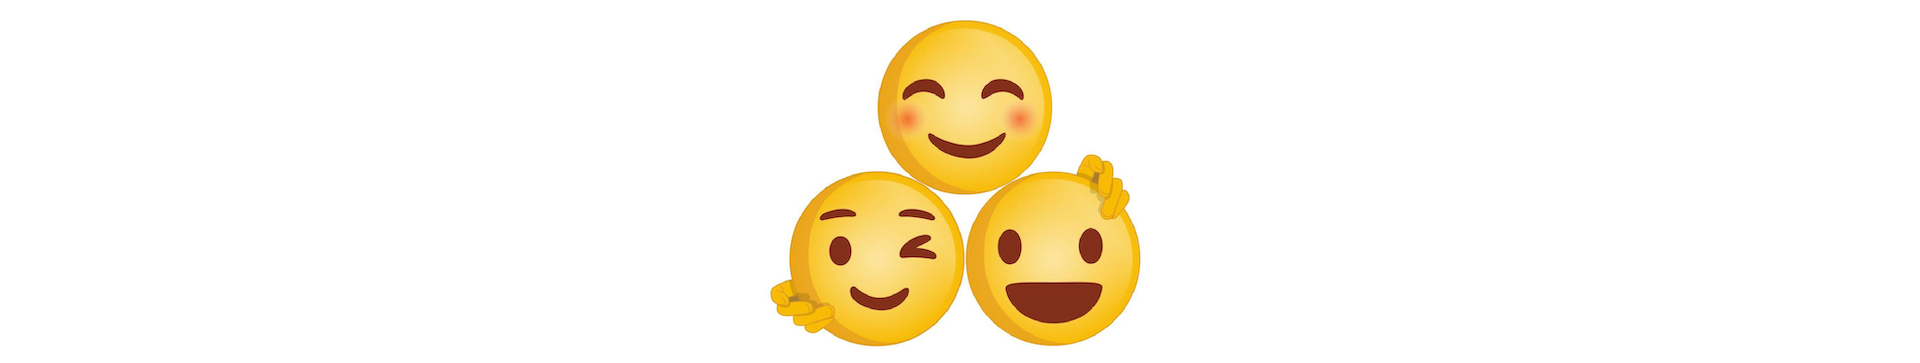 etisalat-emoji-en-1920x363